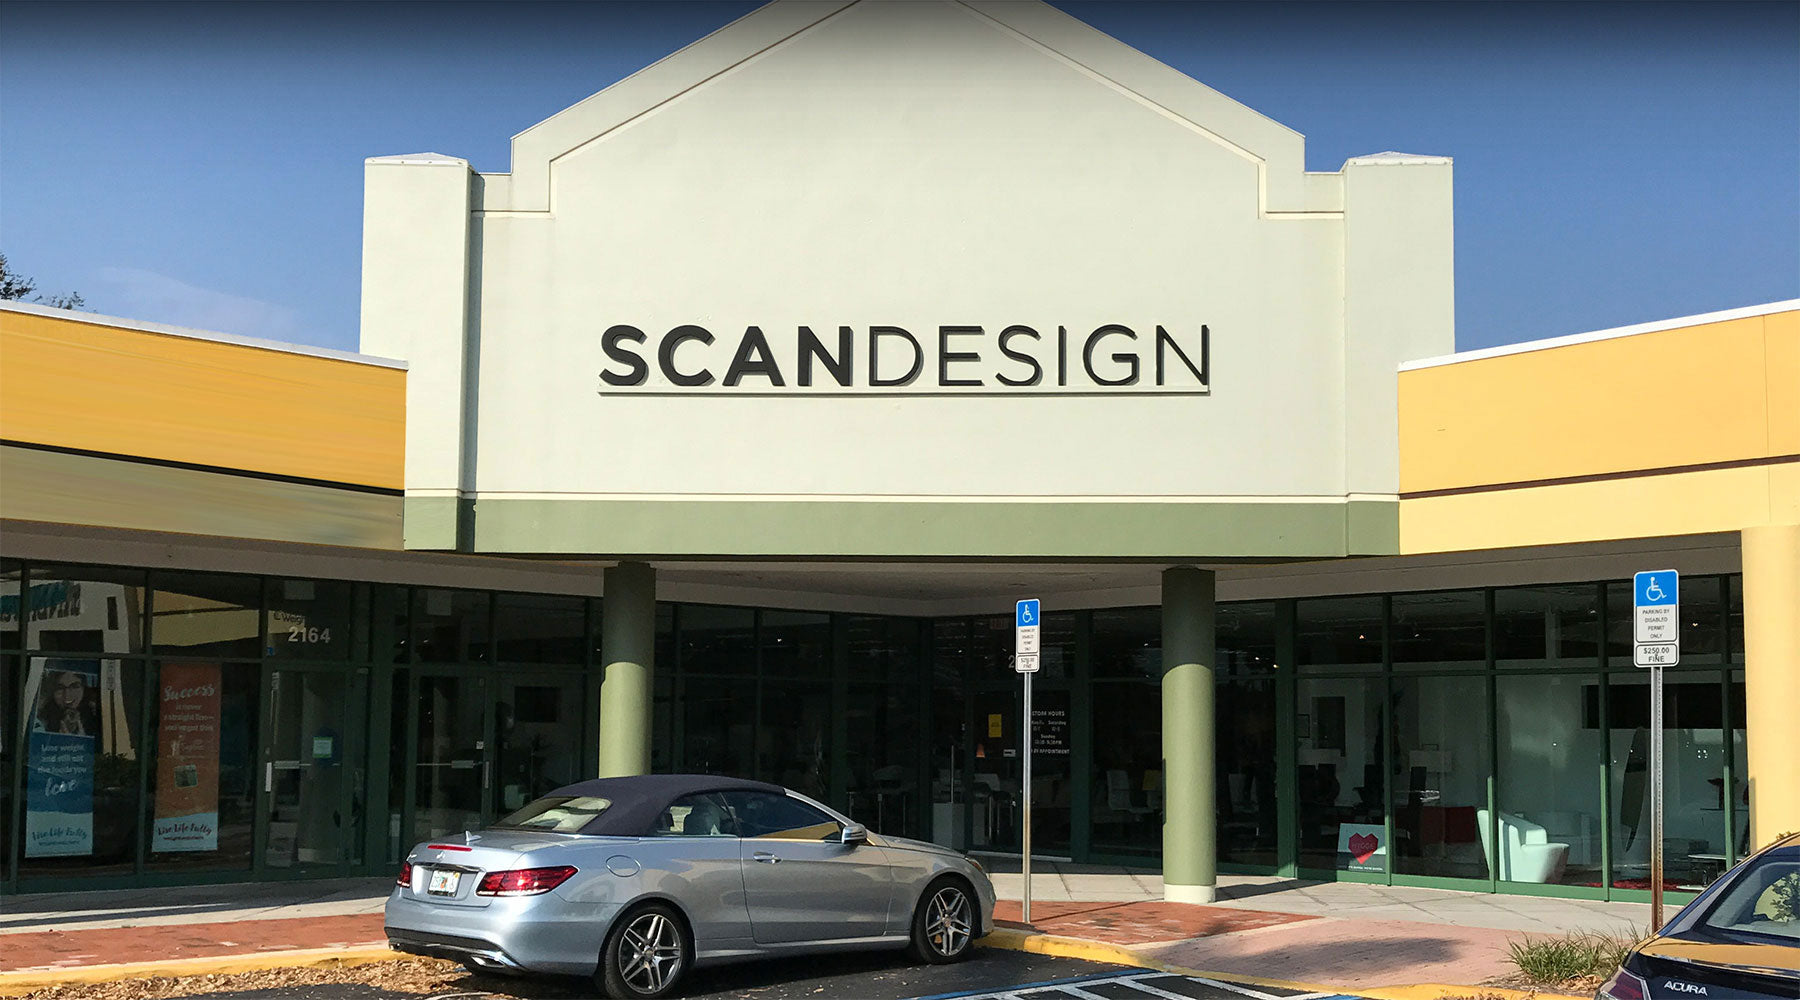 Scan Design in Naples, Florida